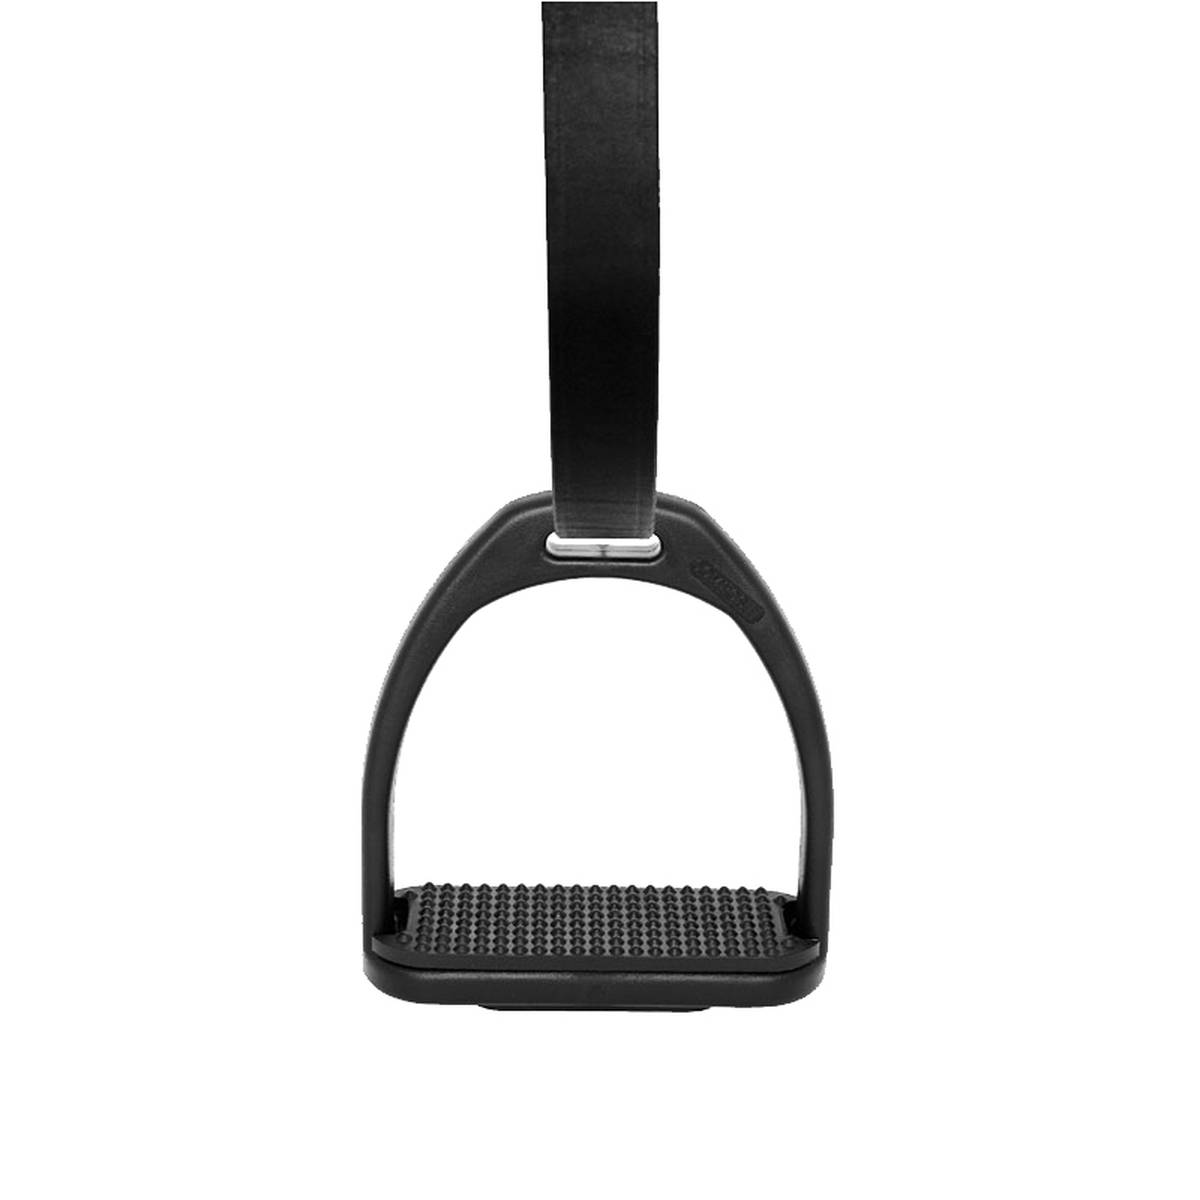 Compositi Plastic Profile Stirrups Lightweight Black With Treads